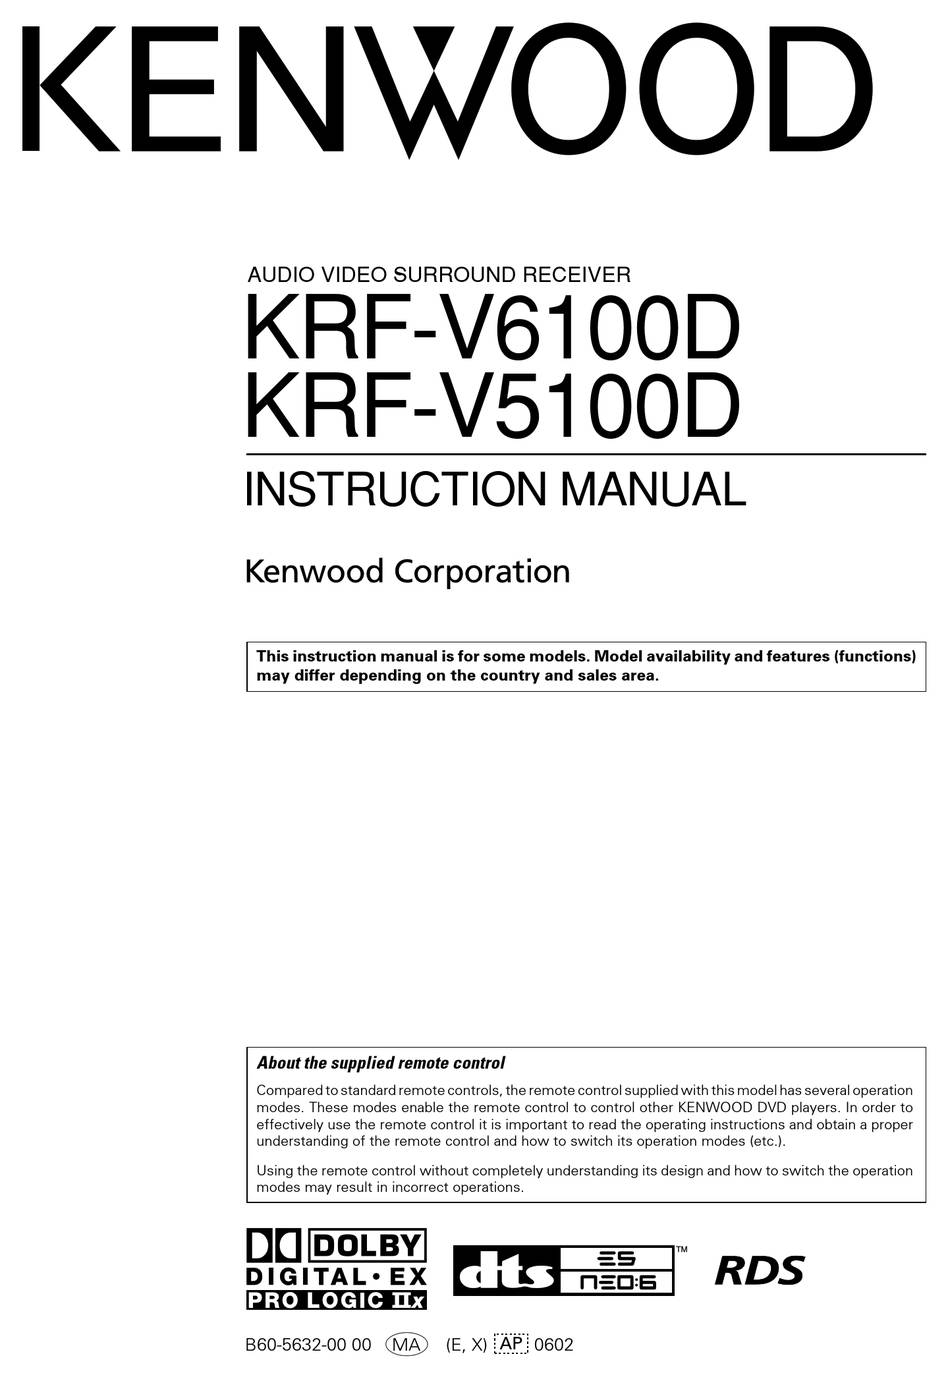 Kenwood KRF-V5100D